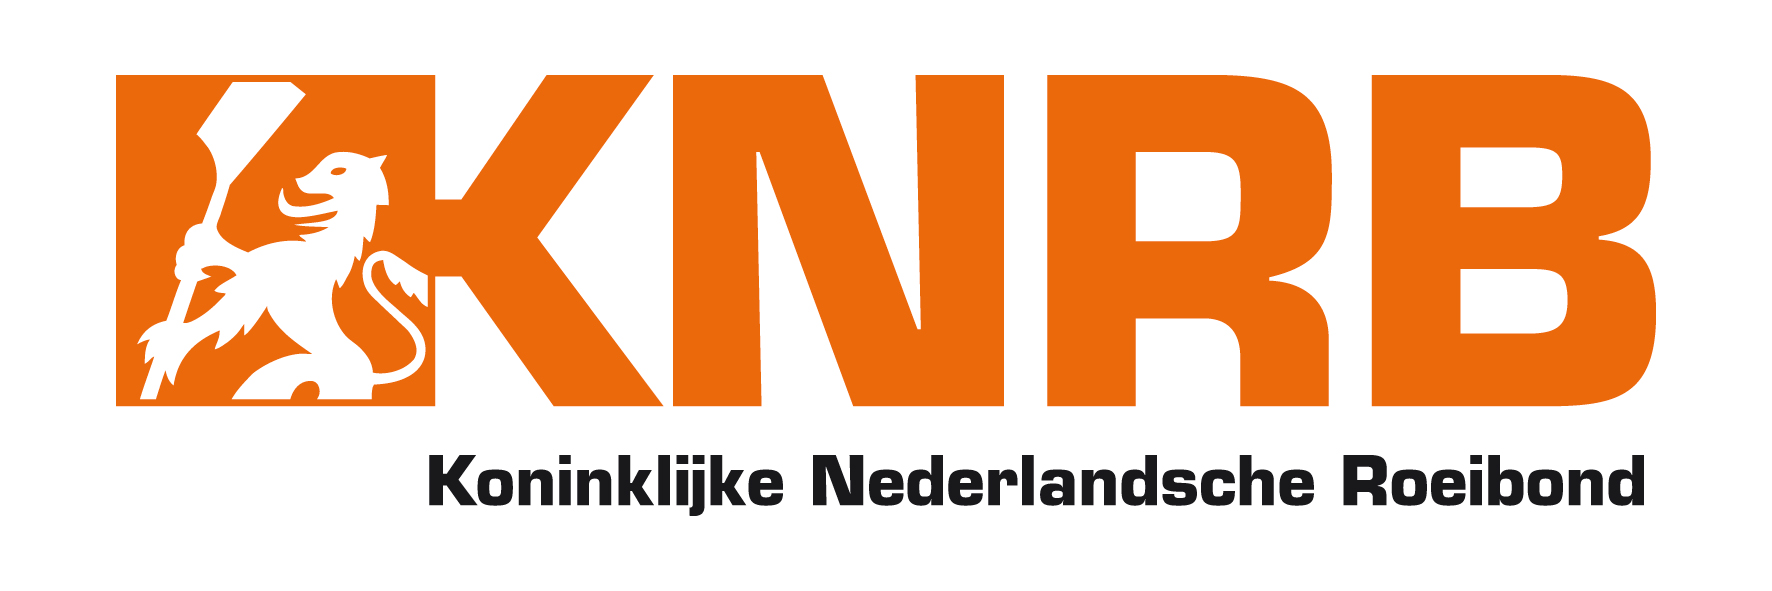 KNRB logo 2013.jpg